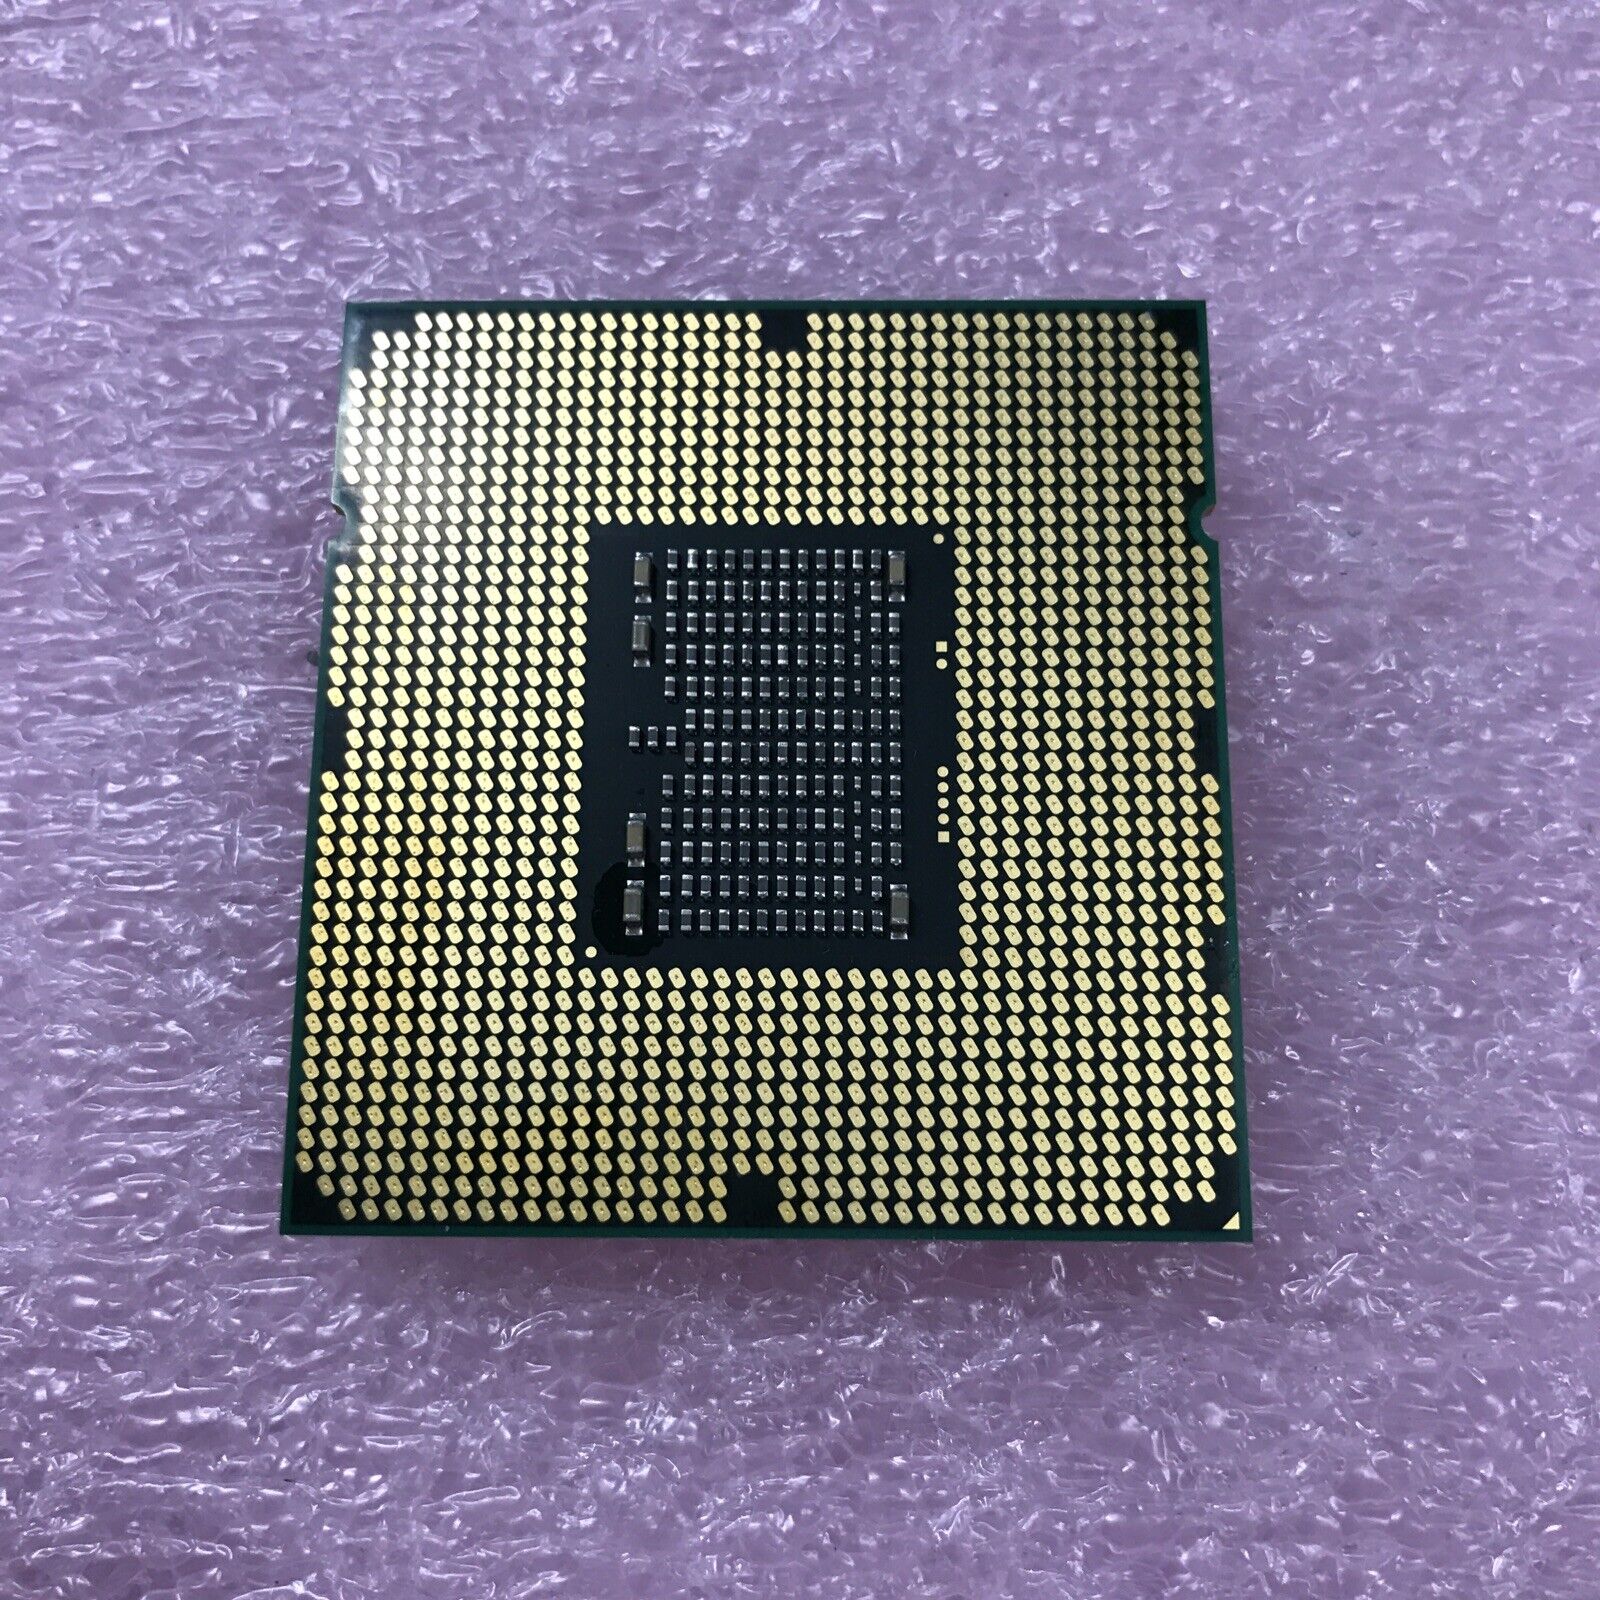 (Lot of 2) Intel Xeon X5650 2.66GHz 12MB 6.4GT/s SLBV3 CPU Processors